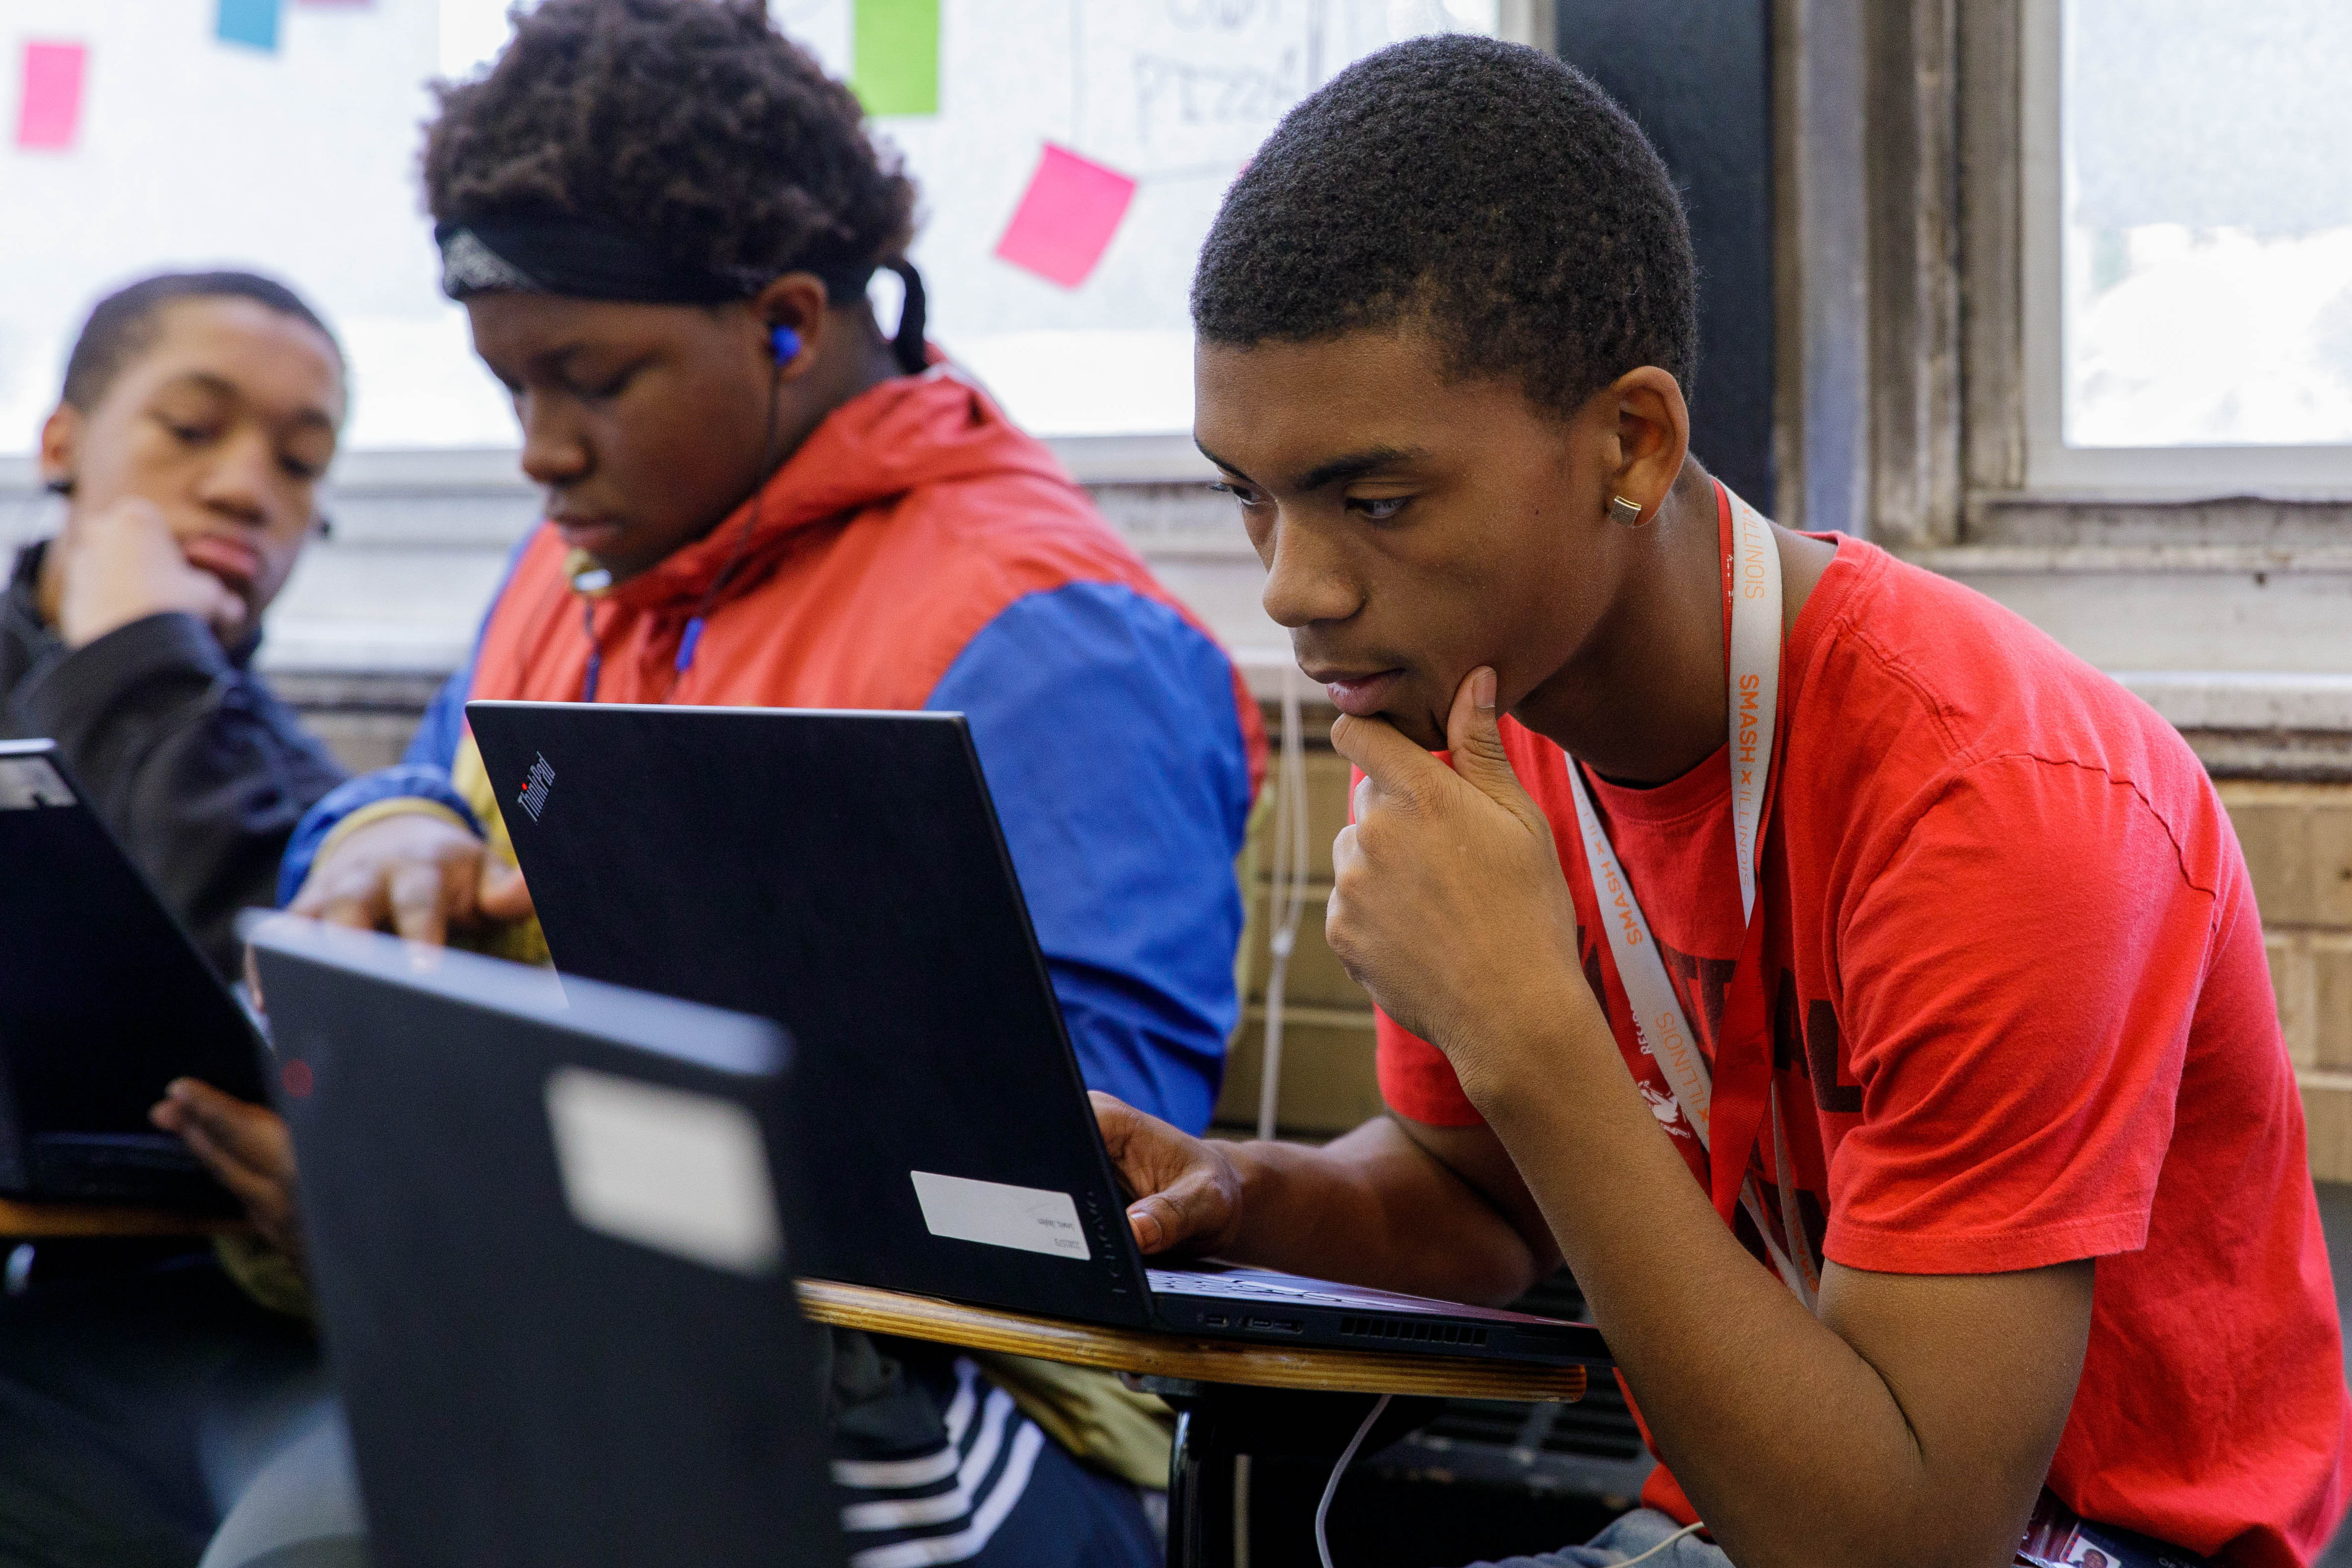 image of students at computer